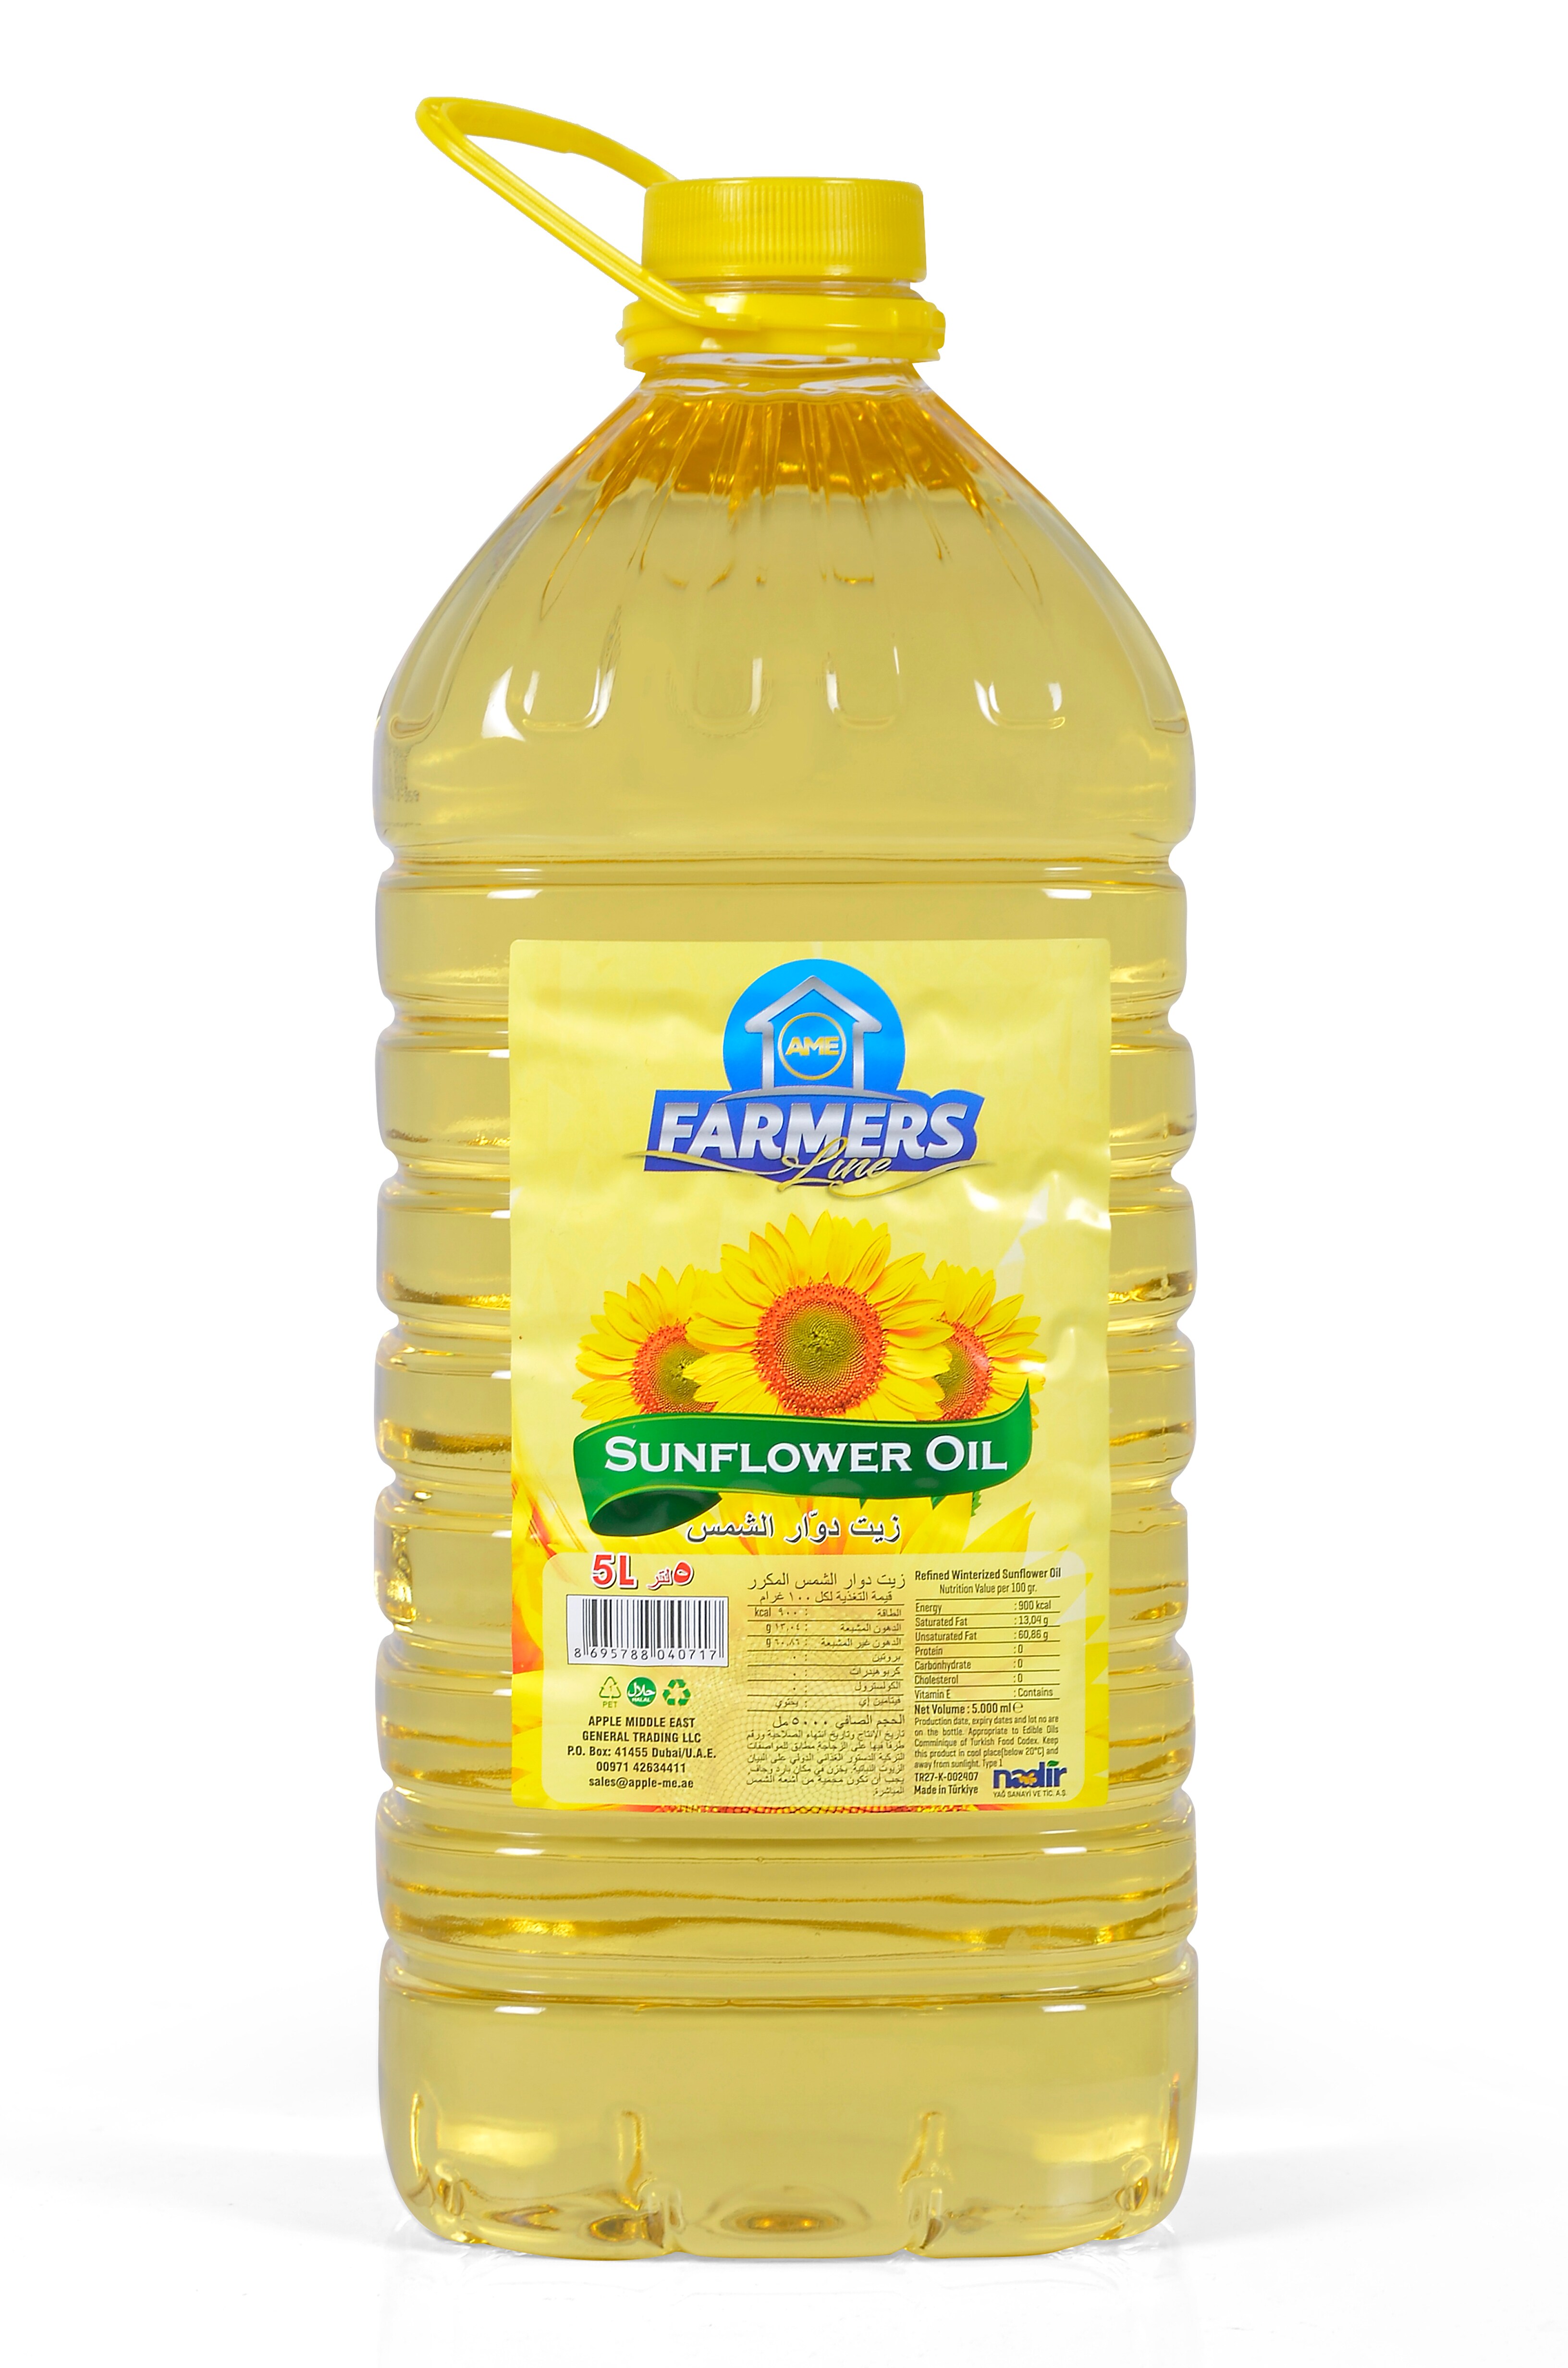 Farmers Line Sunflower Oil, 5l, Pack of 4